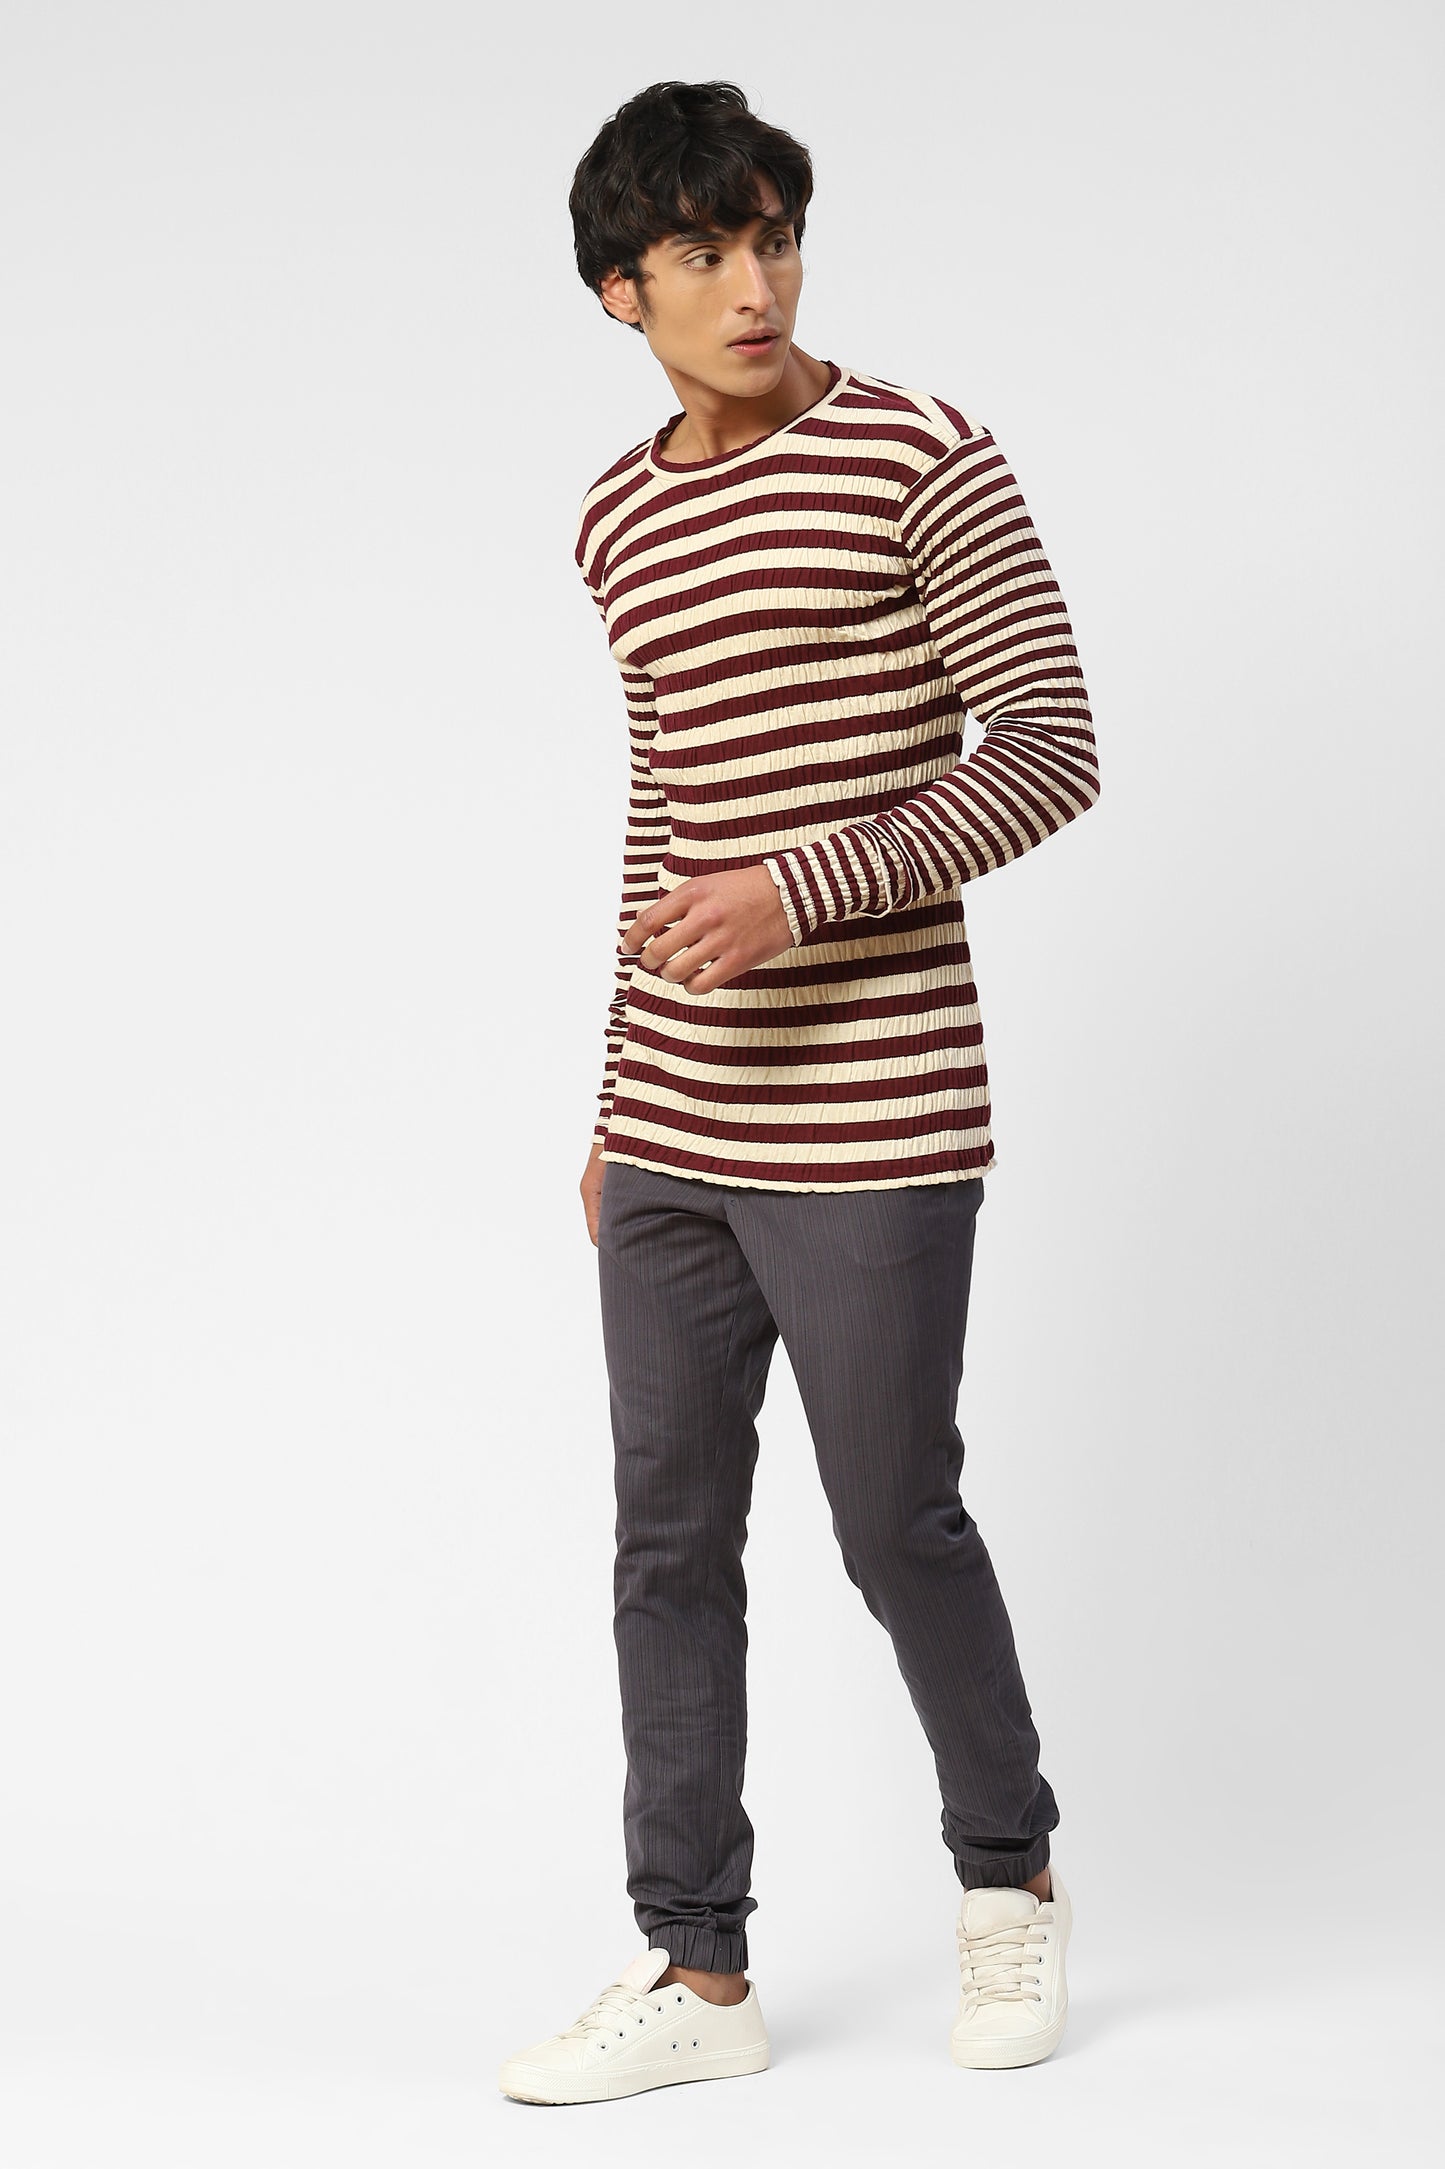 Full Sleeved Wine Red Striped Crinkle Cotton T-Shirt For Men